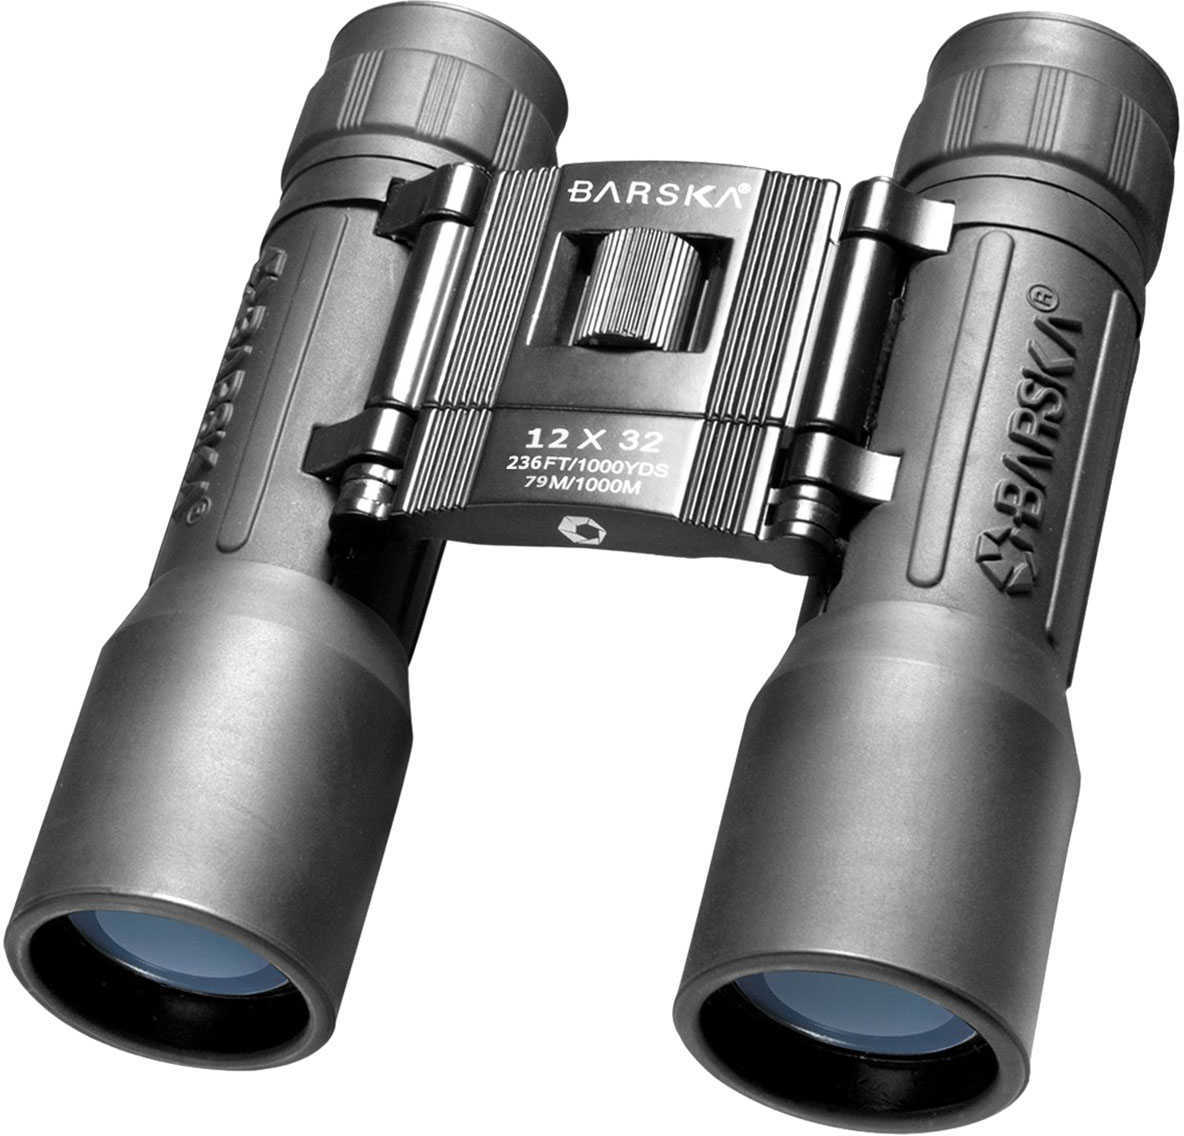 Barska Optics Lucid View Compact Binocular 12x32mm, Blue Lens, Black Md: Ab10113